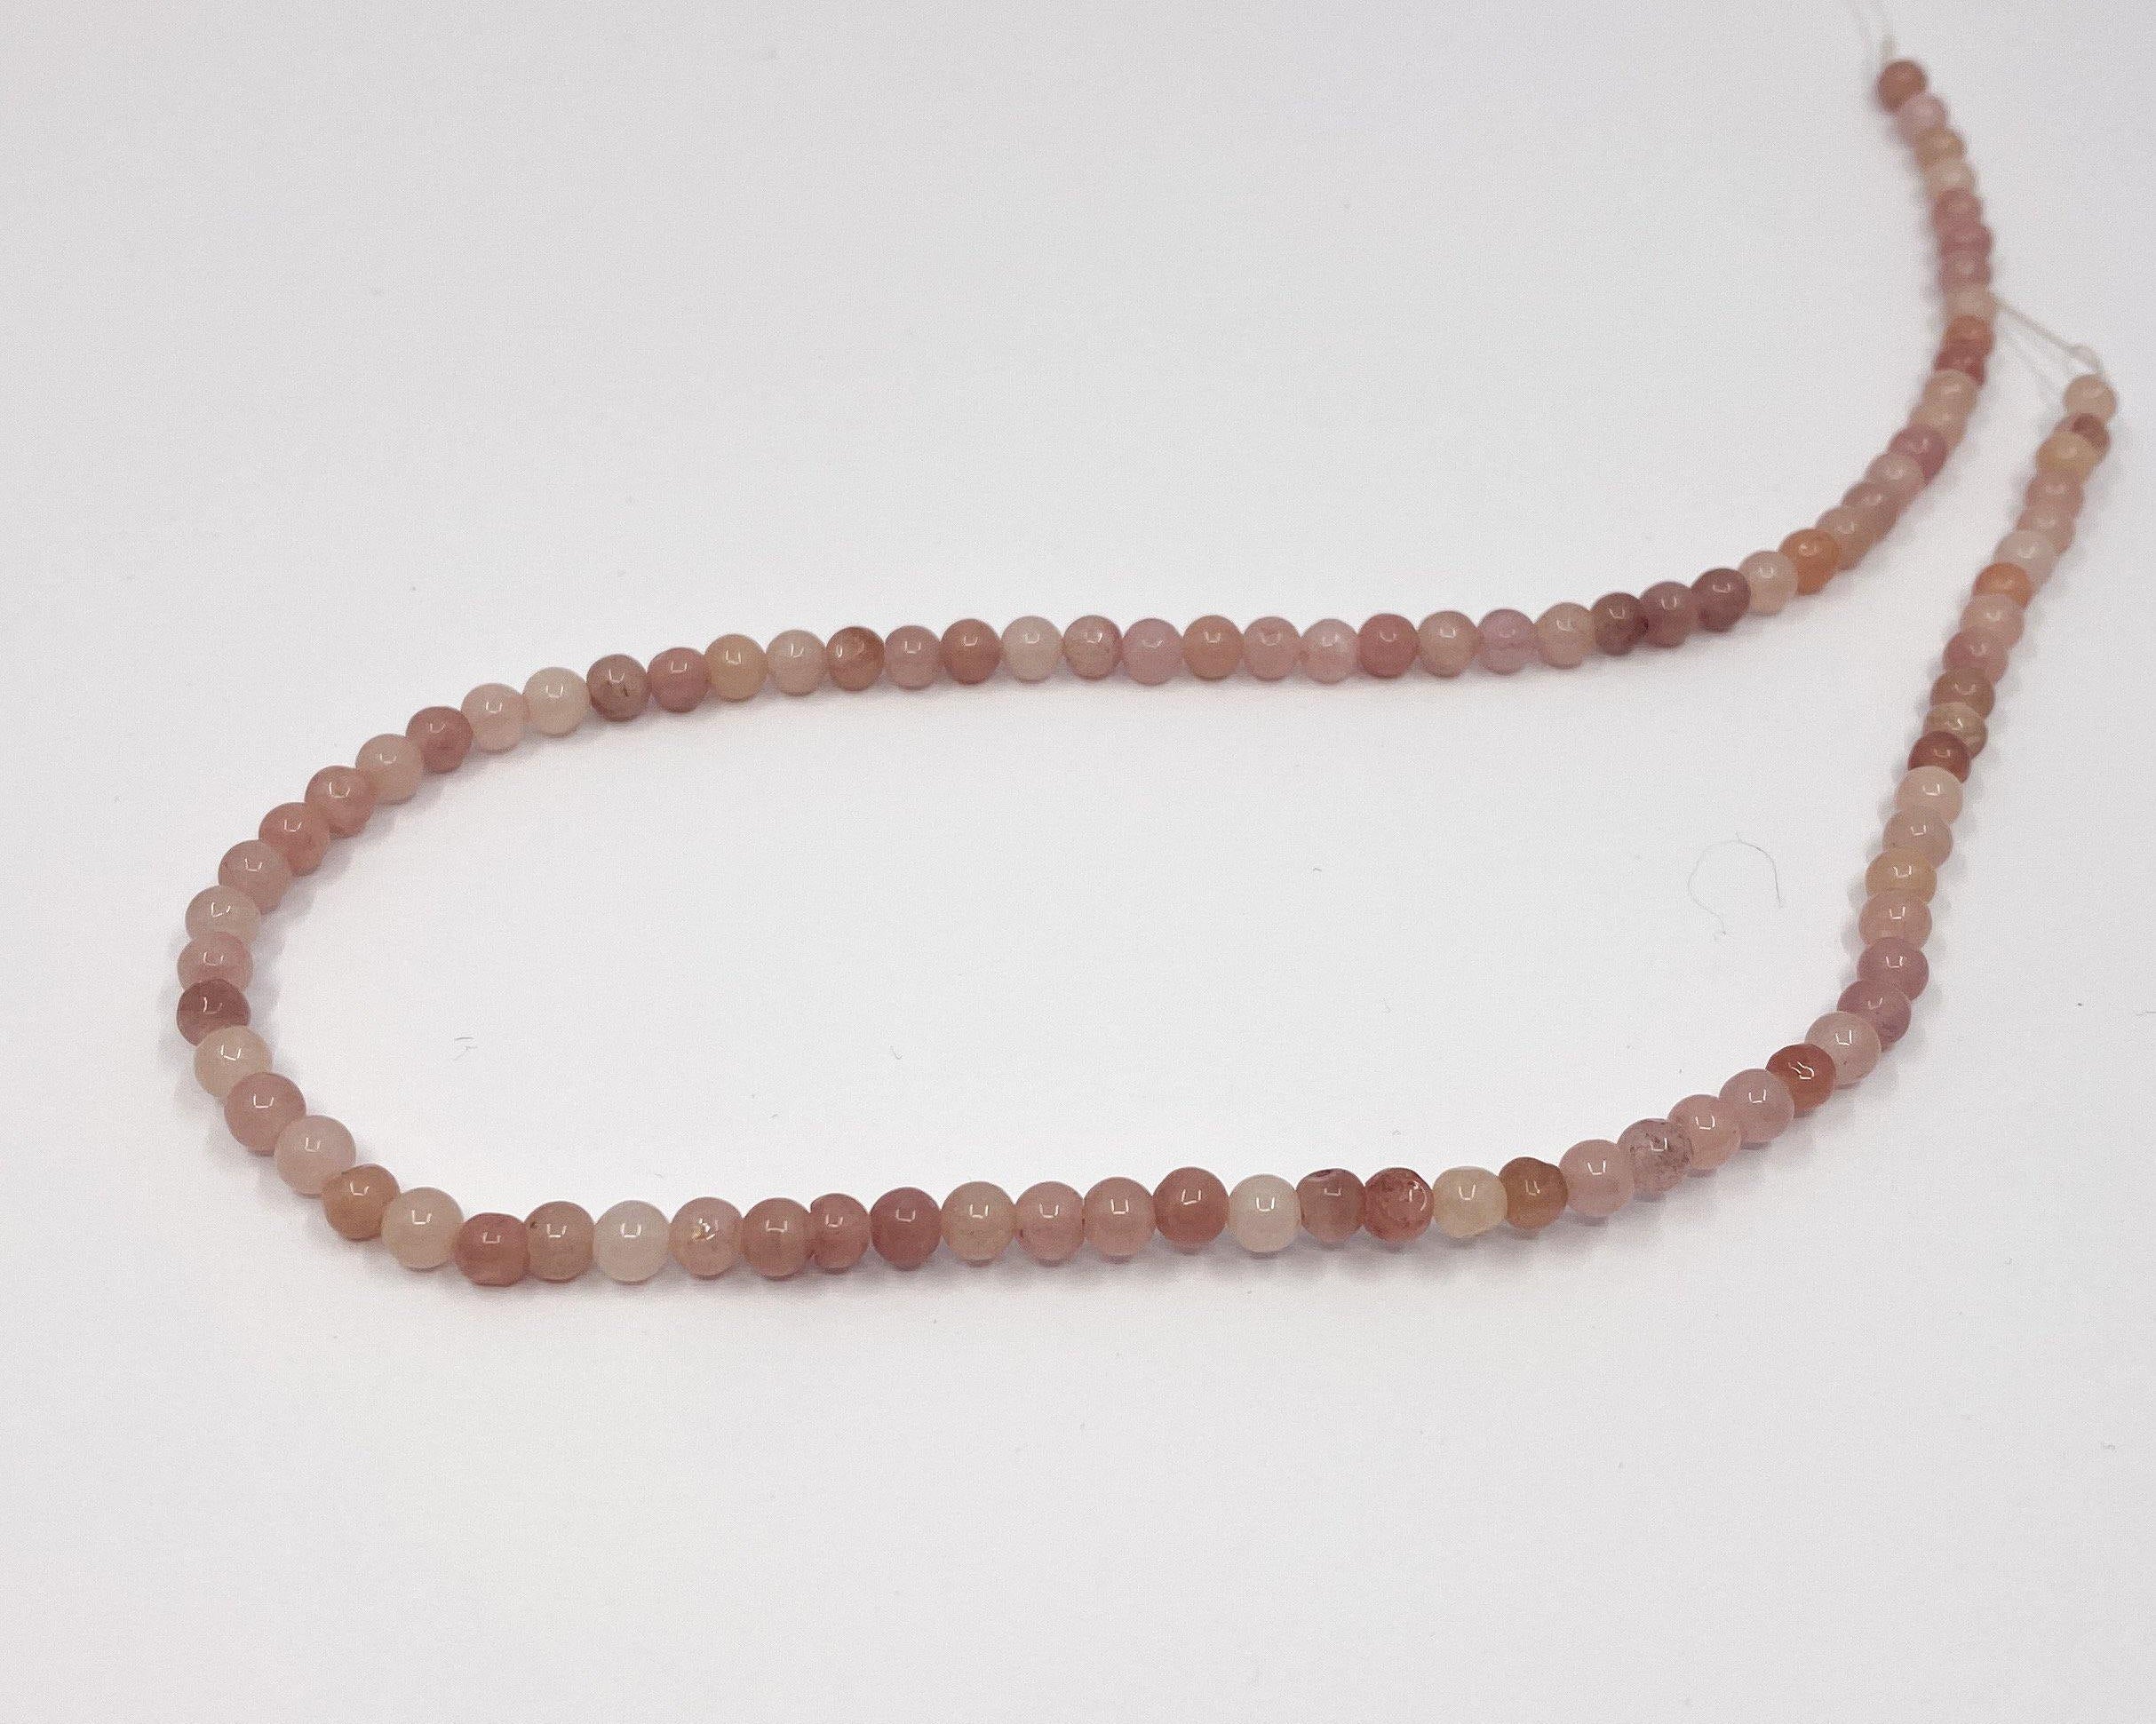 Naturstein Perlen Marmor und Calcit 4 mm - Farbe light taupe - bead&more